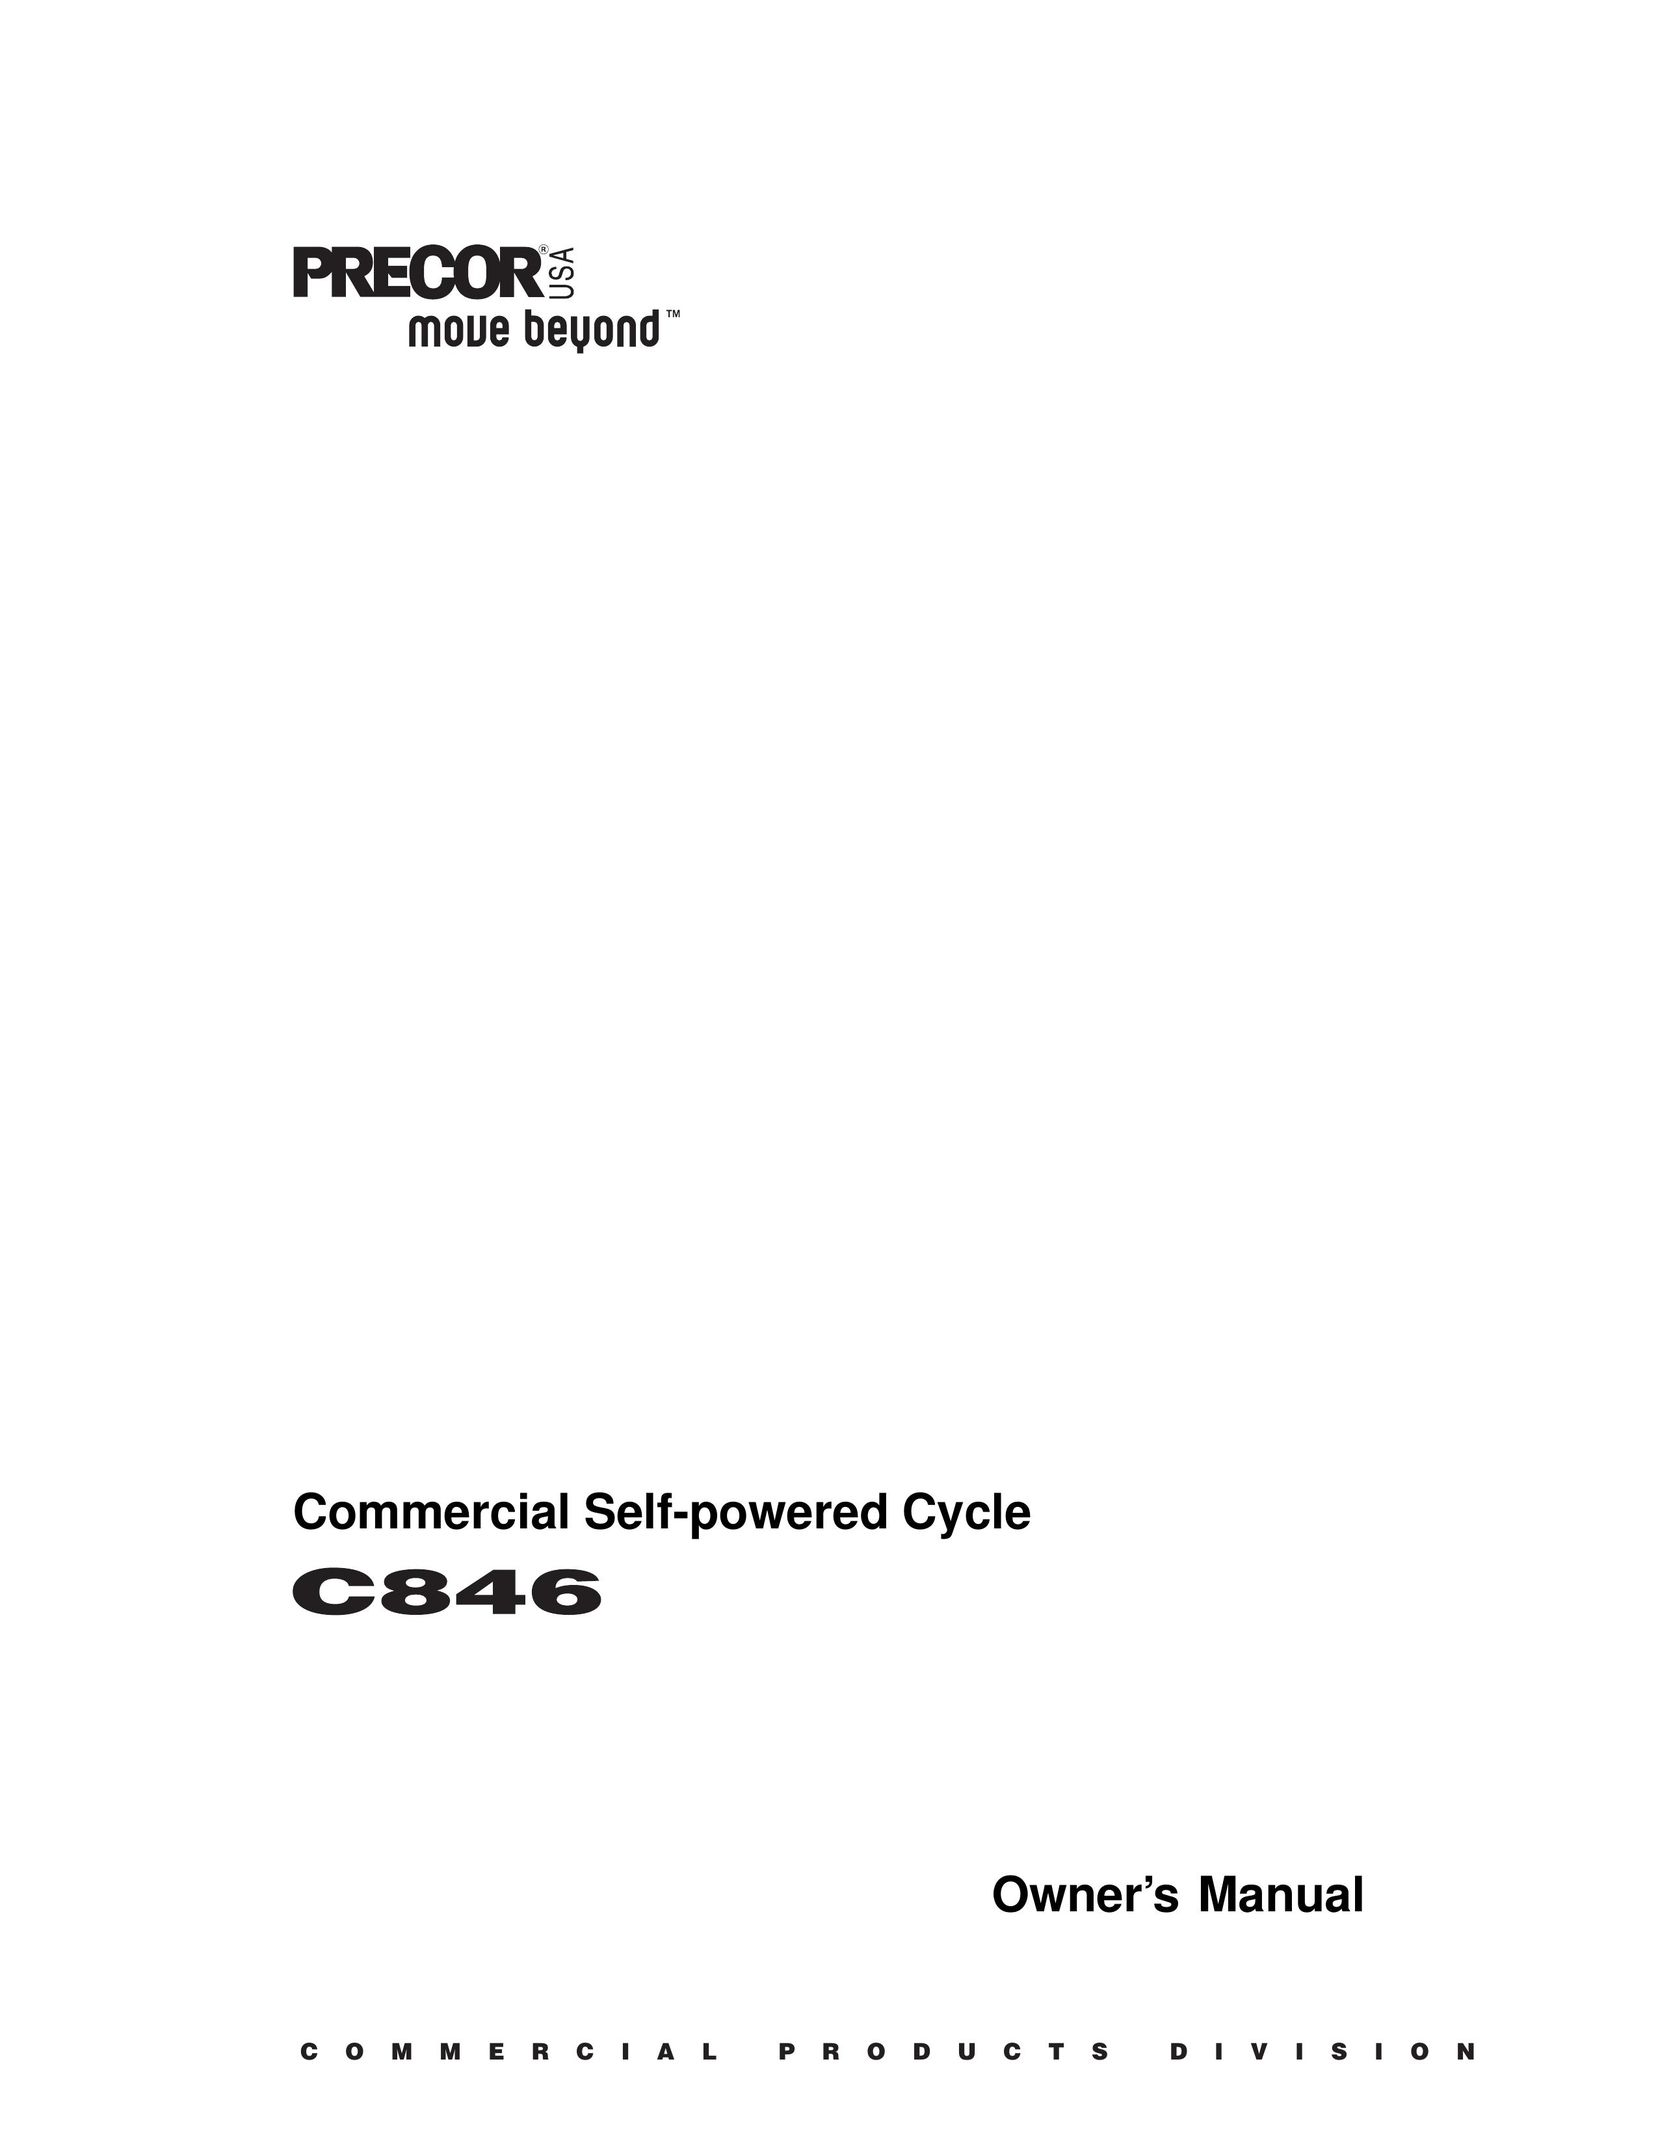 Precor C846 Bicycle Accessories User Manual